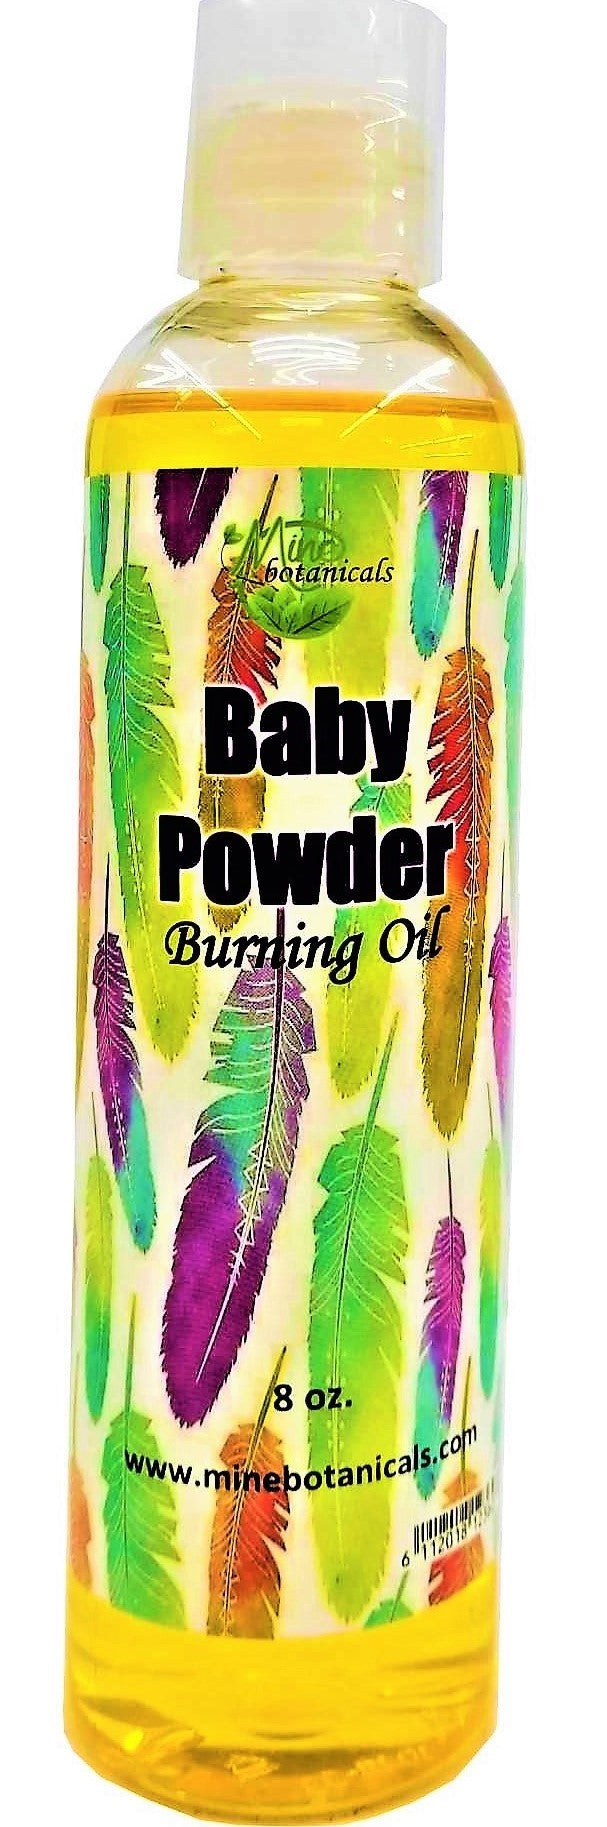 Baby Powder Burning Oil